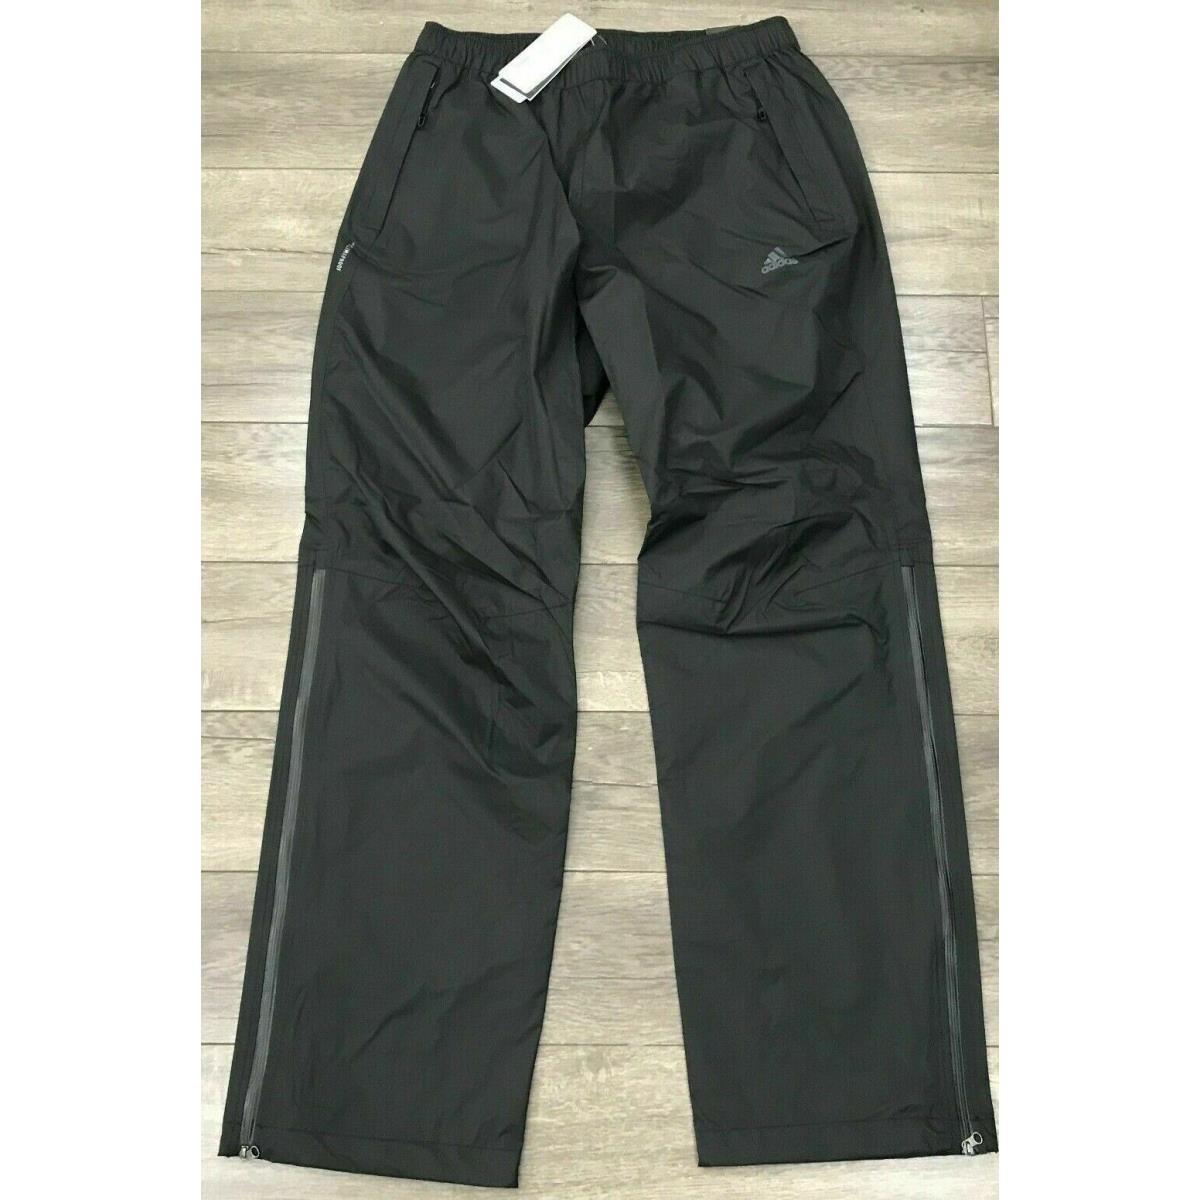 Mens Adidas Climaproof Wandertag Waterproof 2.5L Pants Black A98656